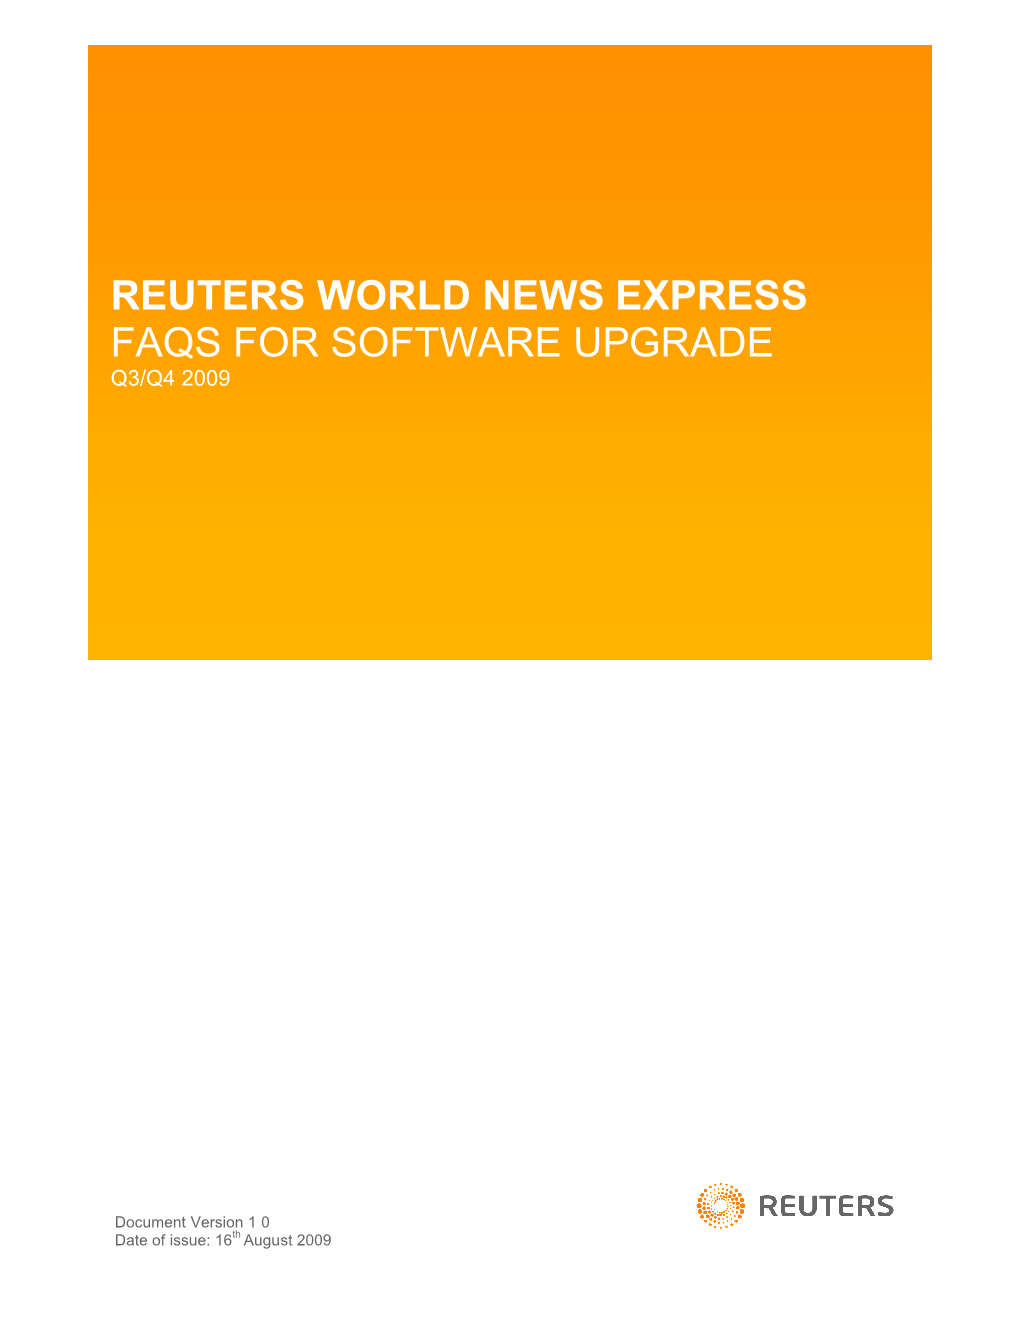 Reuters World News Express Faqs for Software Upgrade Q3/Q4 2009